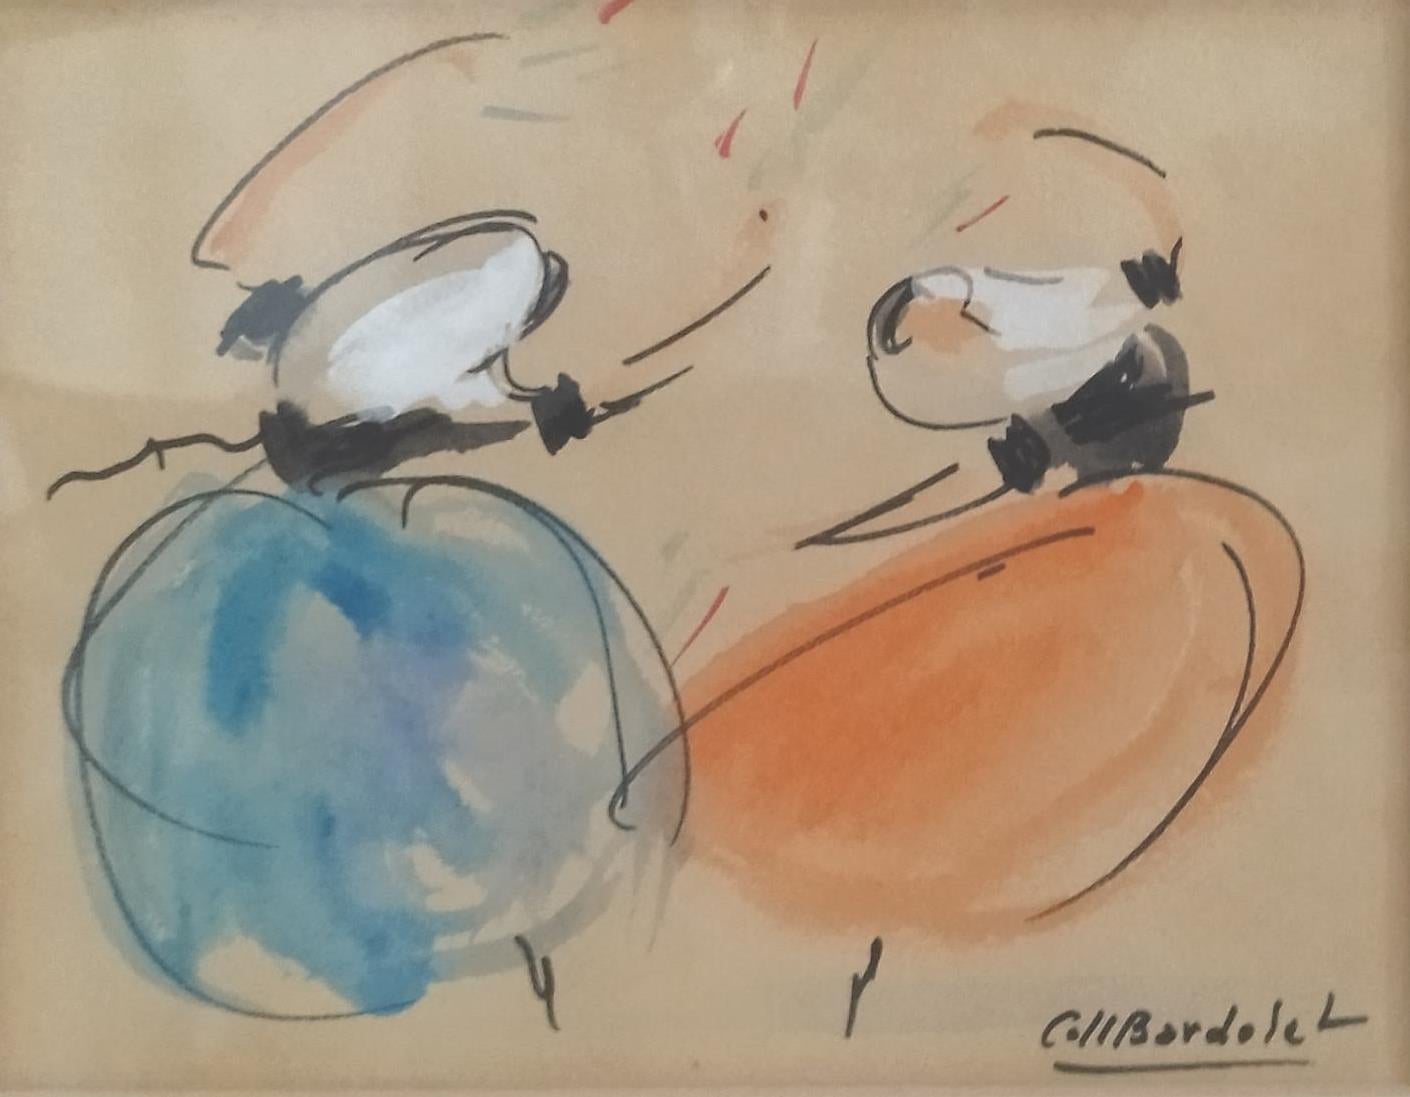 Bardolet Bolero von Coll  Baile  Original expressionistischesistisches Mallorquin-Aquarell  – Painting von Coll Bardolet